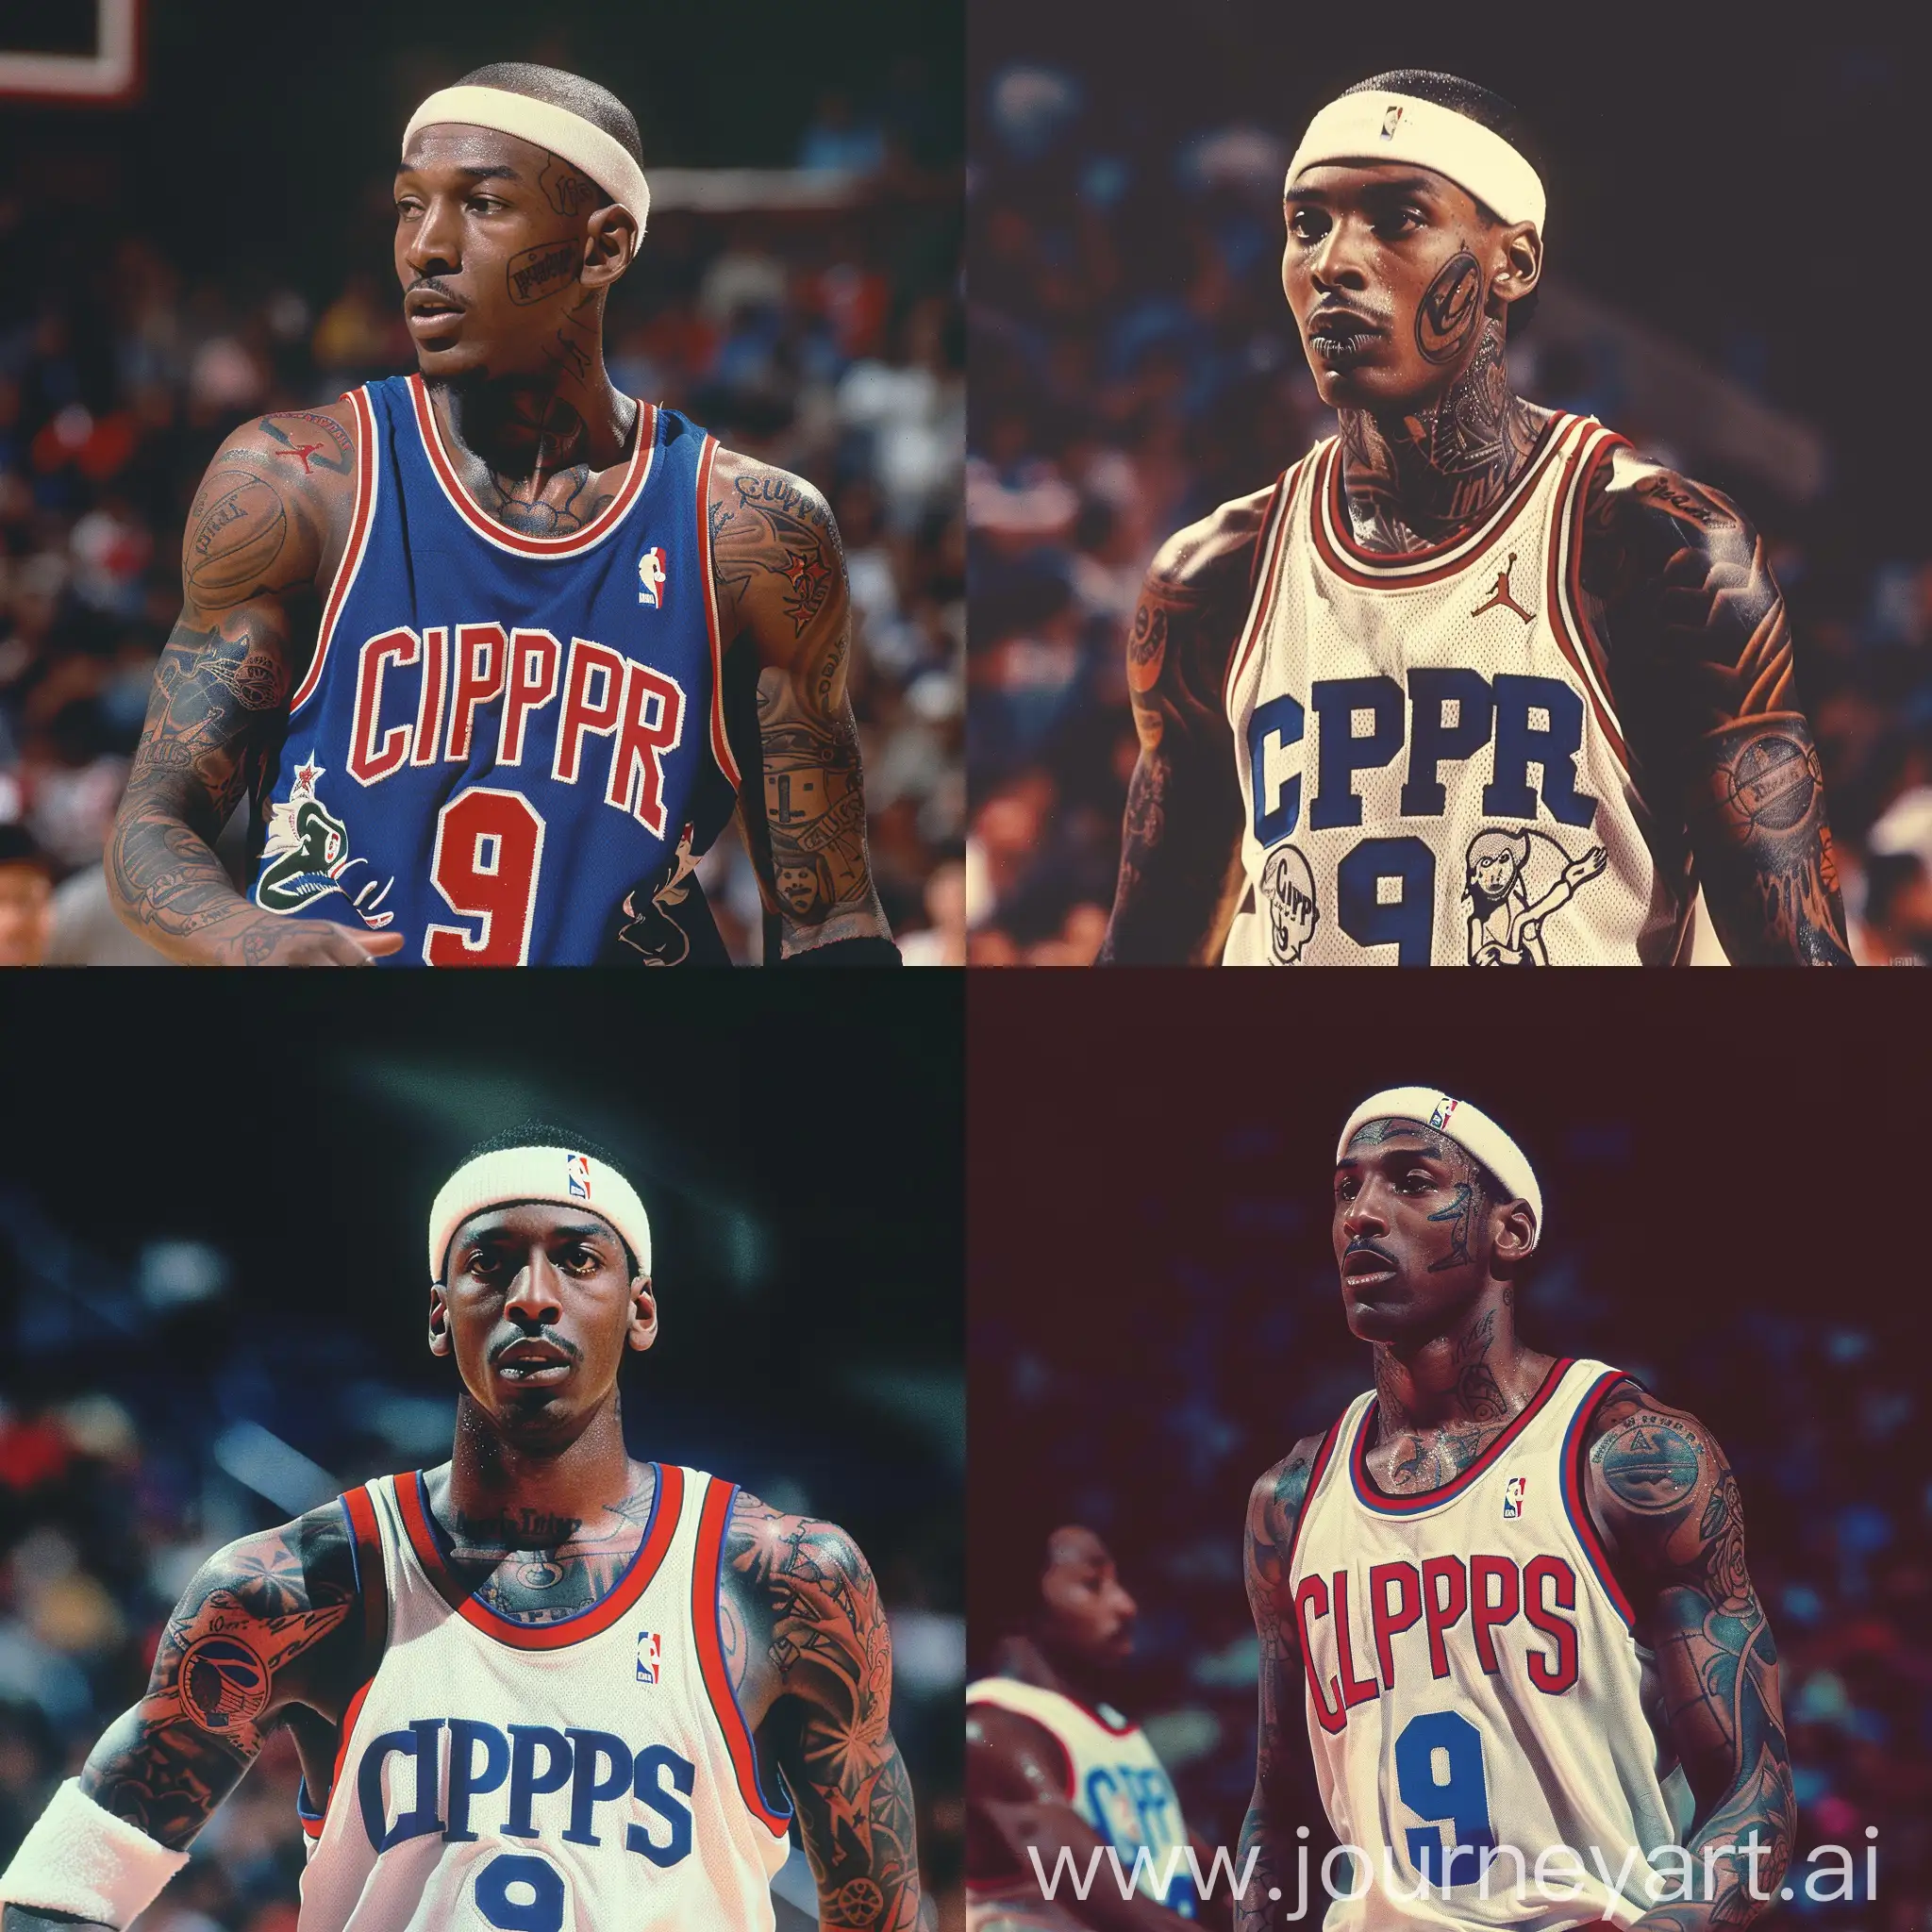 Young-Michael-Jordan-Basketball-Game-Clippers-Jersey-9-Tattoo-Headband